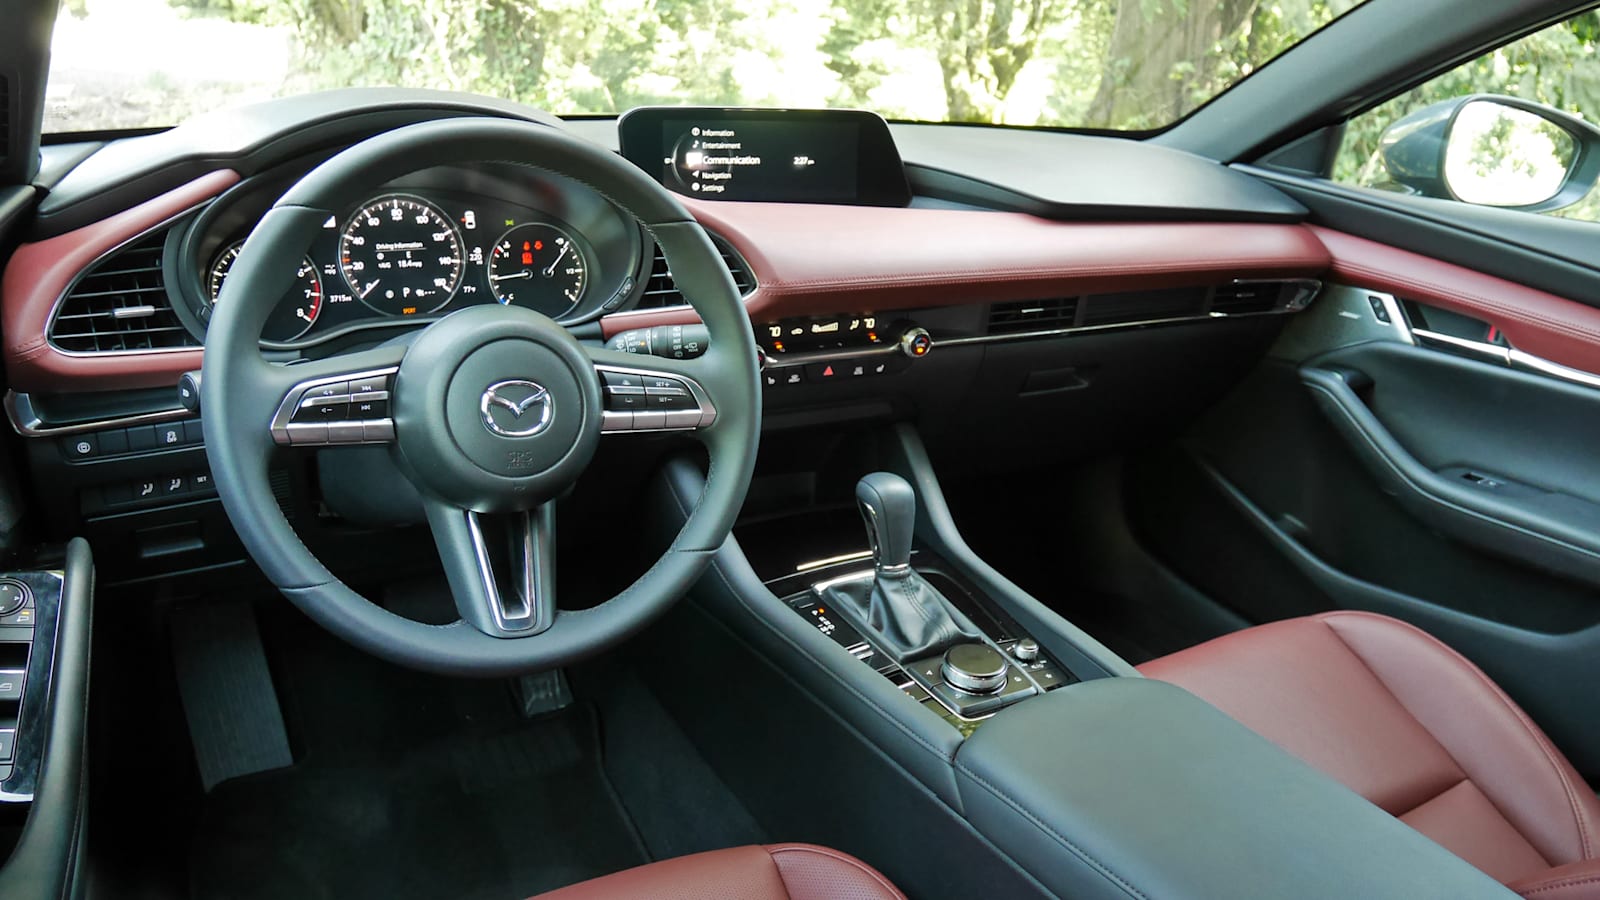 2019 Mazda3 Hatchback AWD Premium Review | Handling, performance, interior,  technology - Autoblog